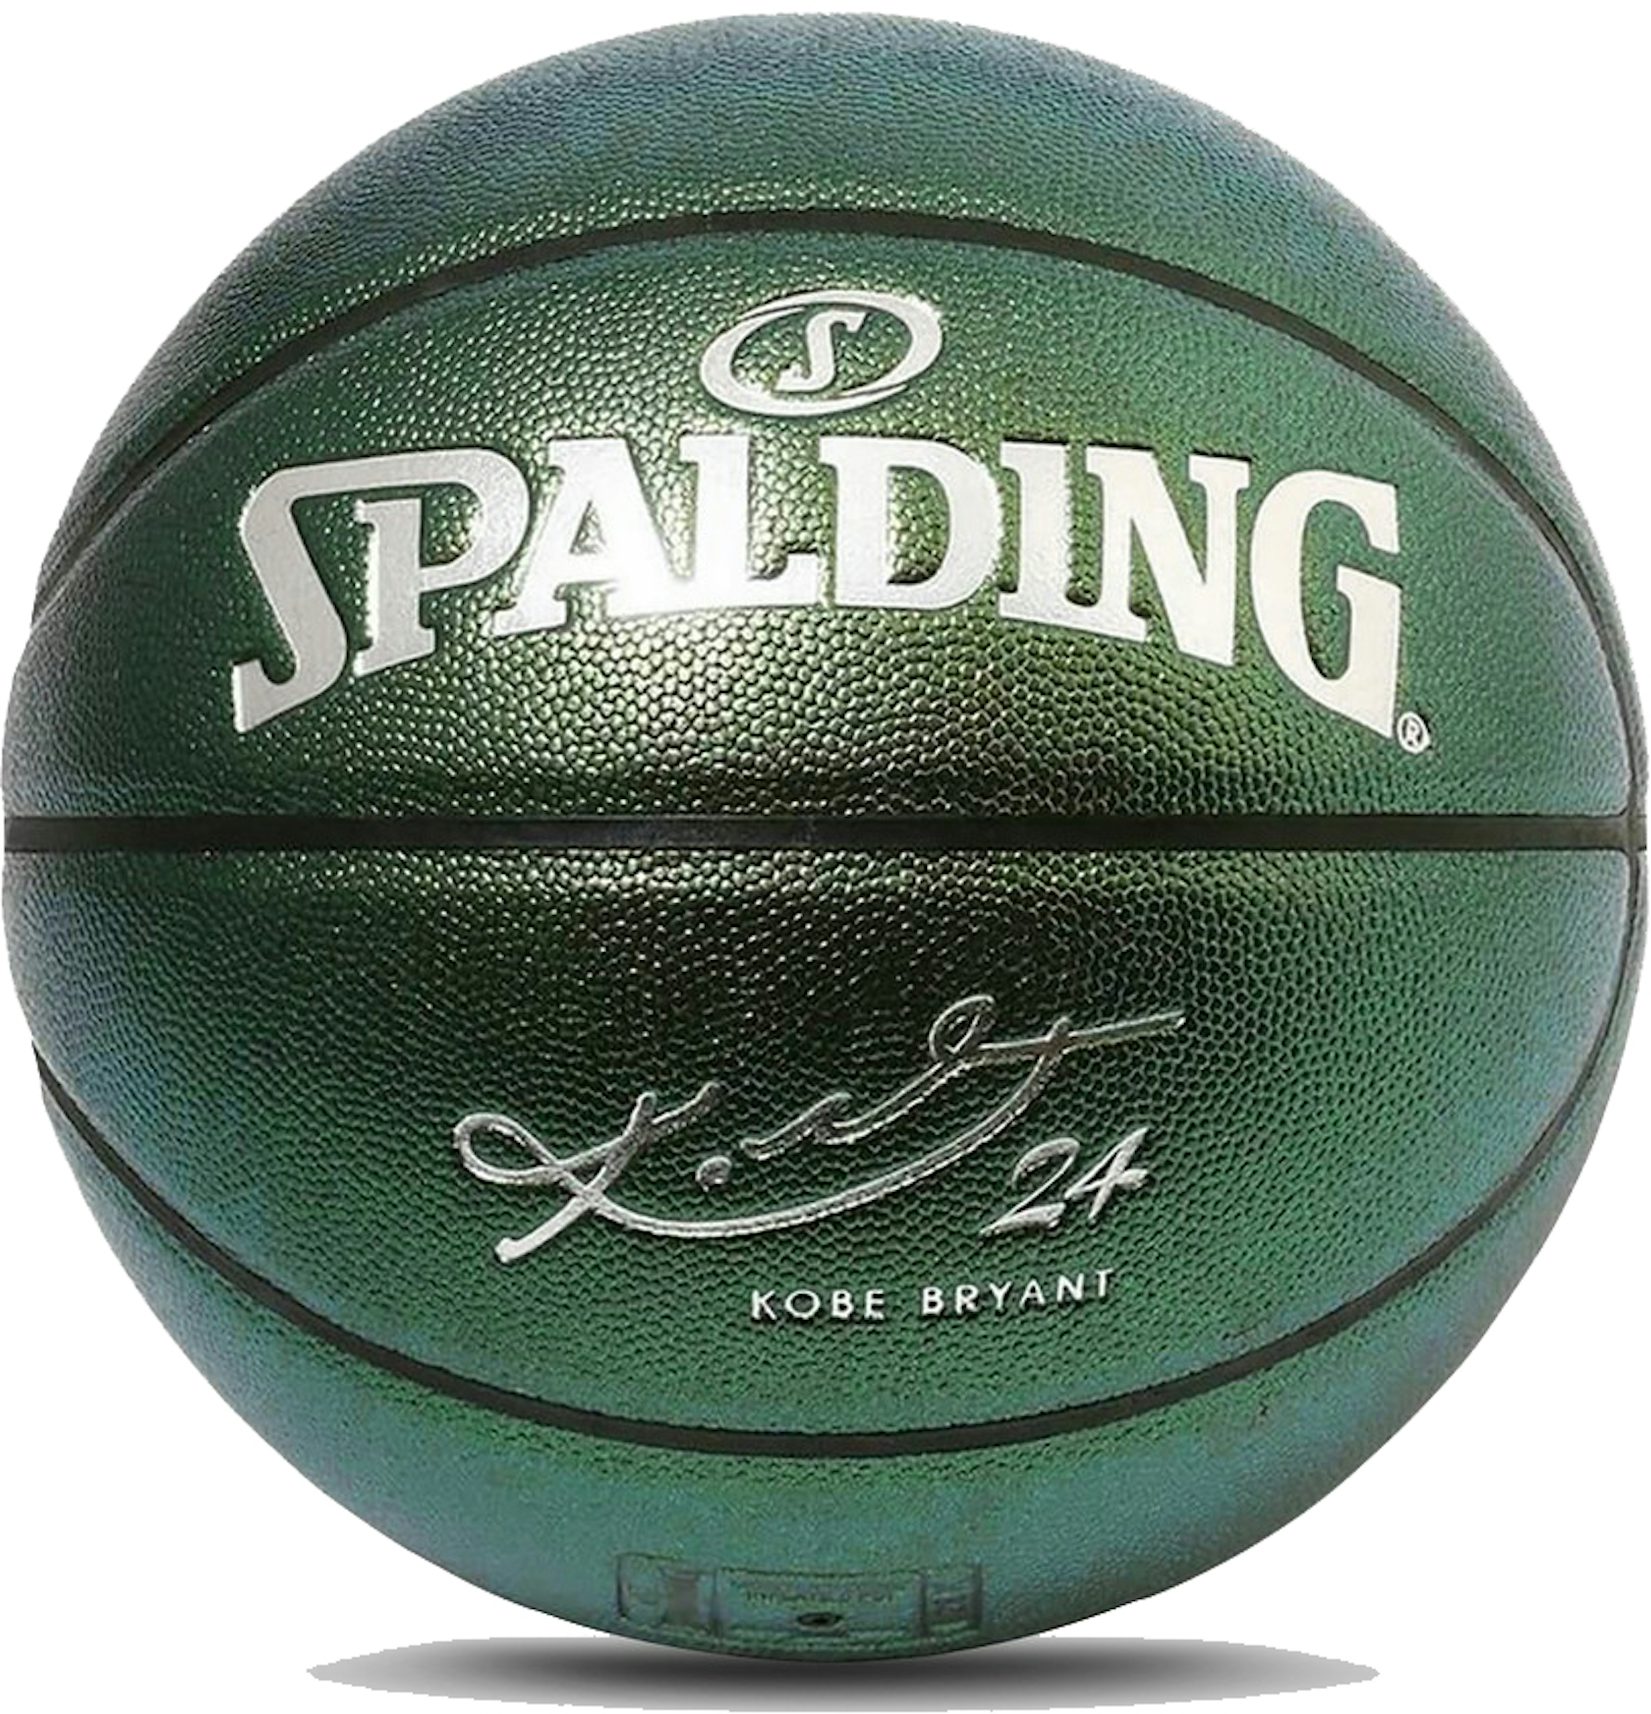 Basketball Bryant Kobe Composite - Spalding 7 - US Size Green FW20